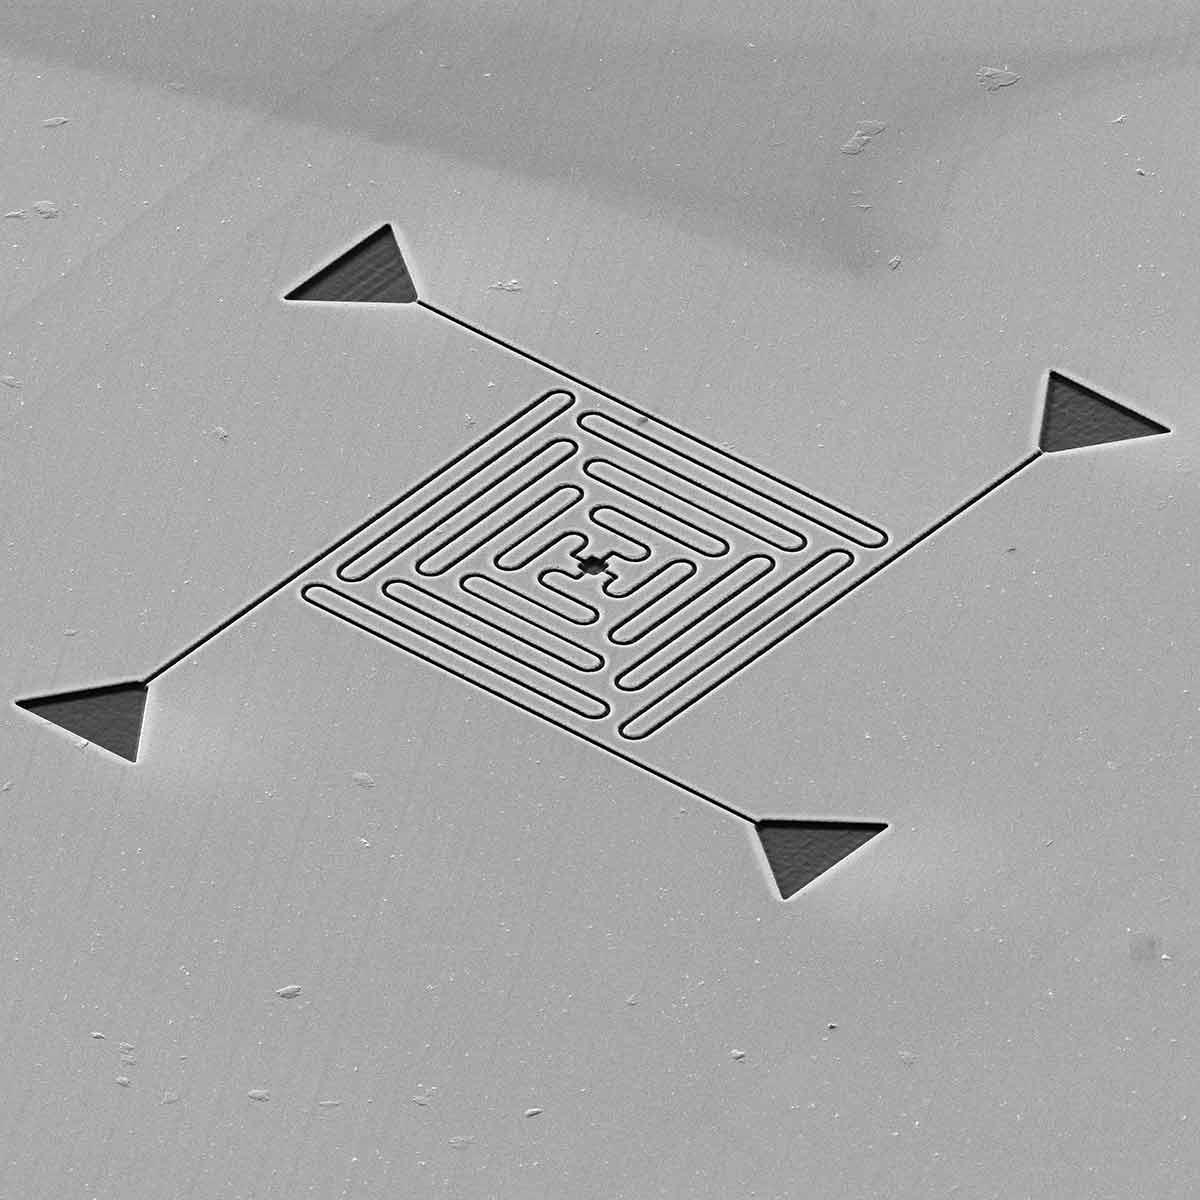 Mikrofluidik-Beispiel: 20 nm breite Nanokanäle in verschiedenen Konfigurationen bis 20 µm Länge.